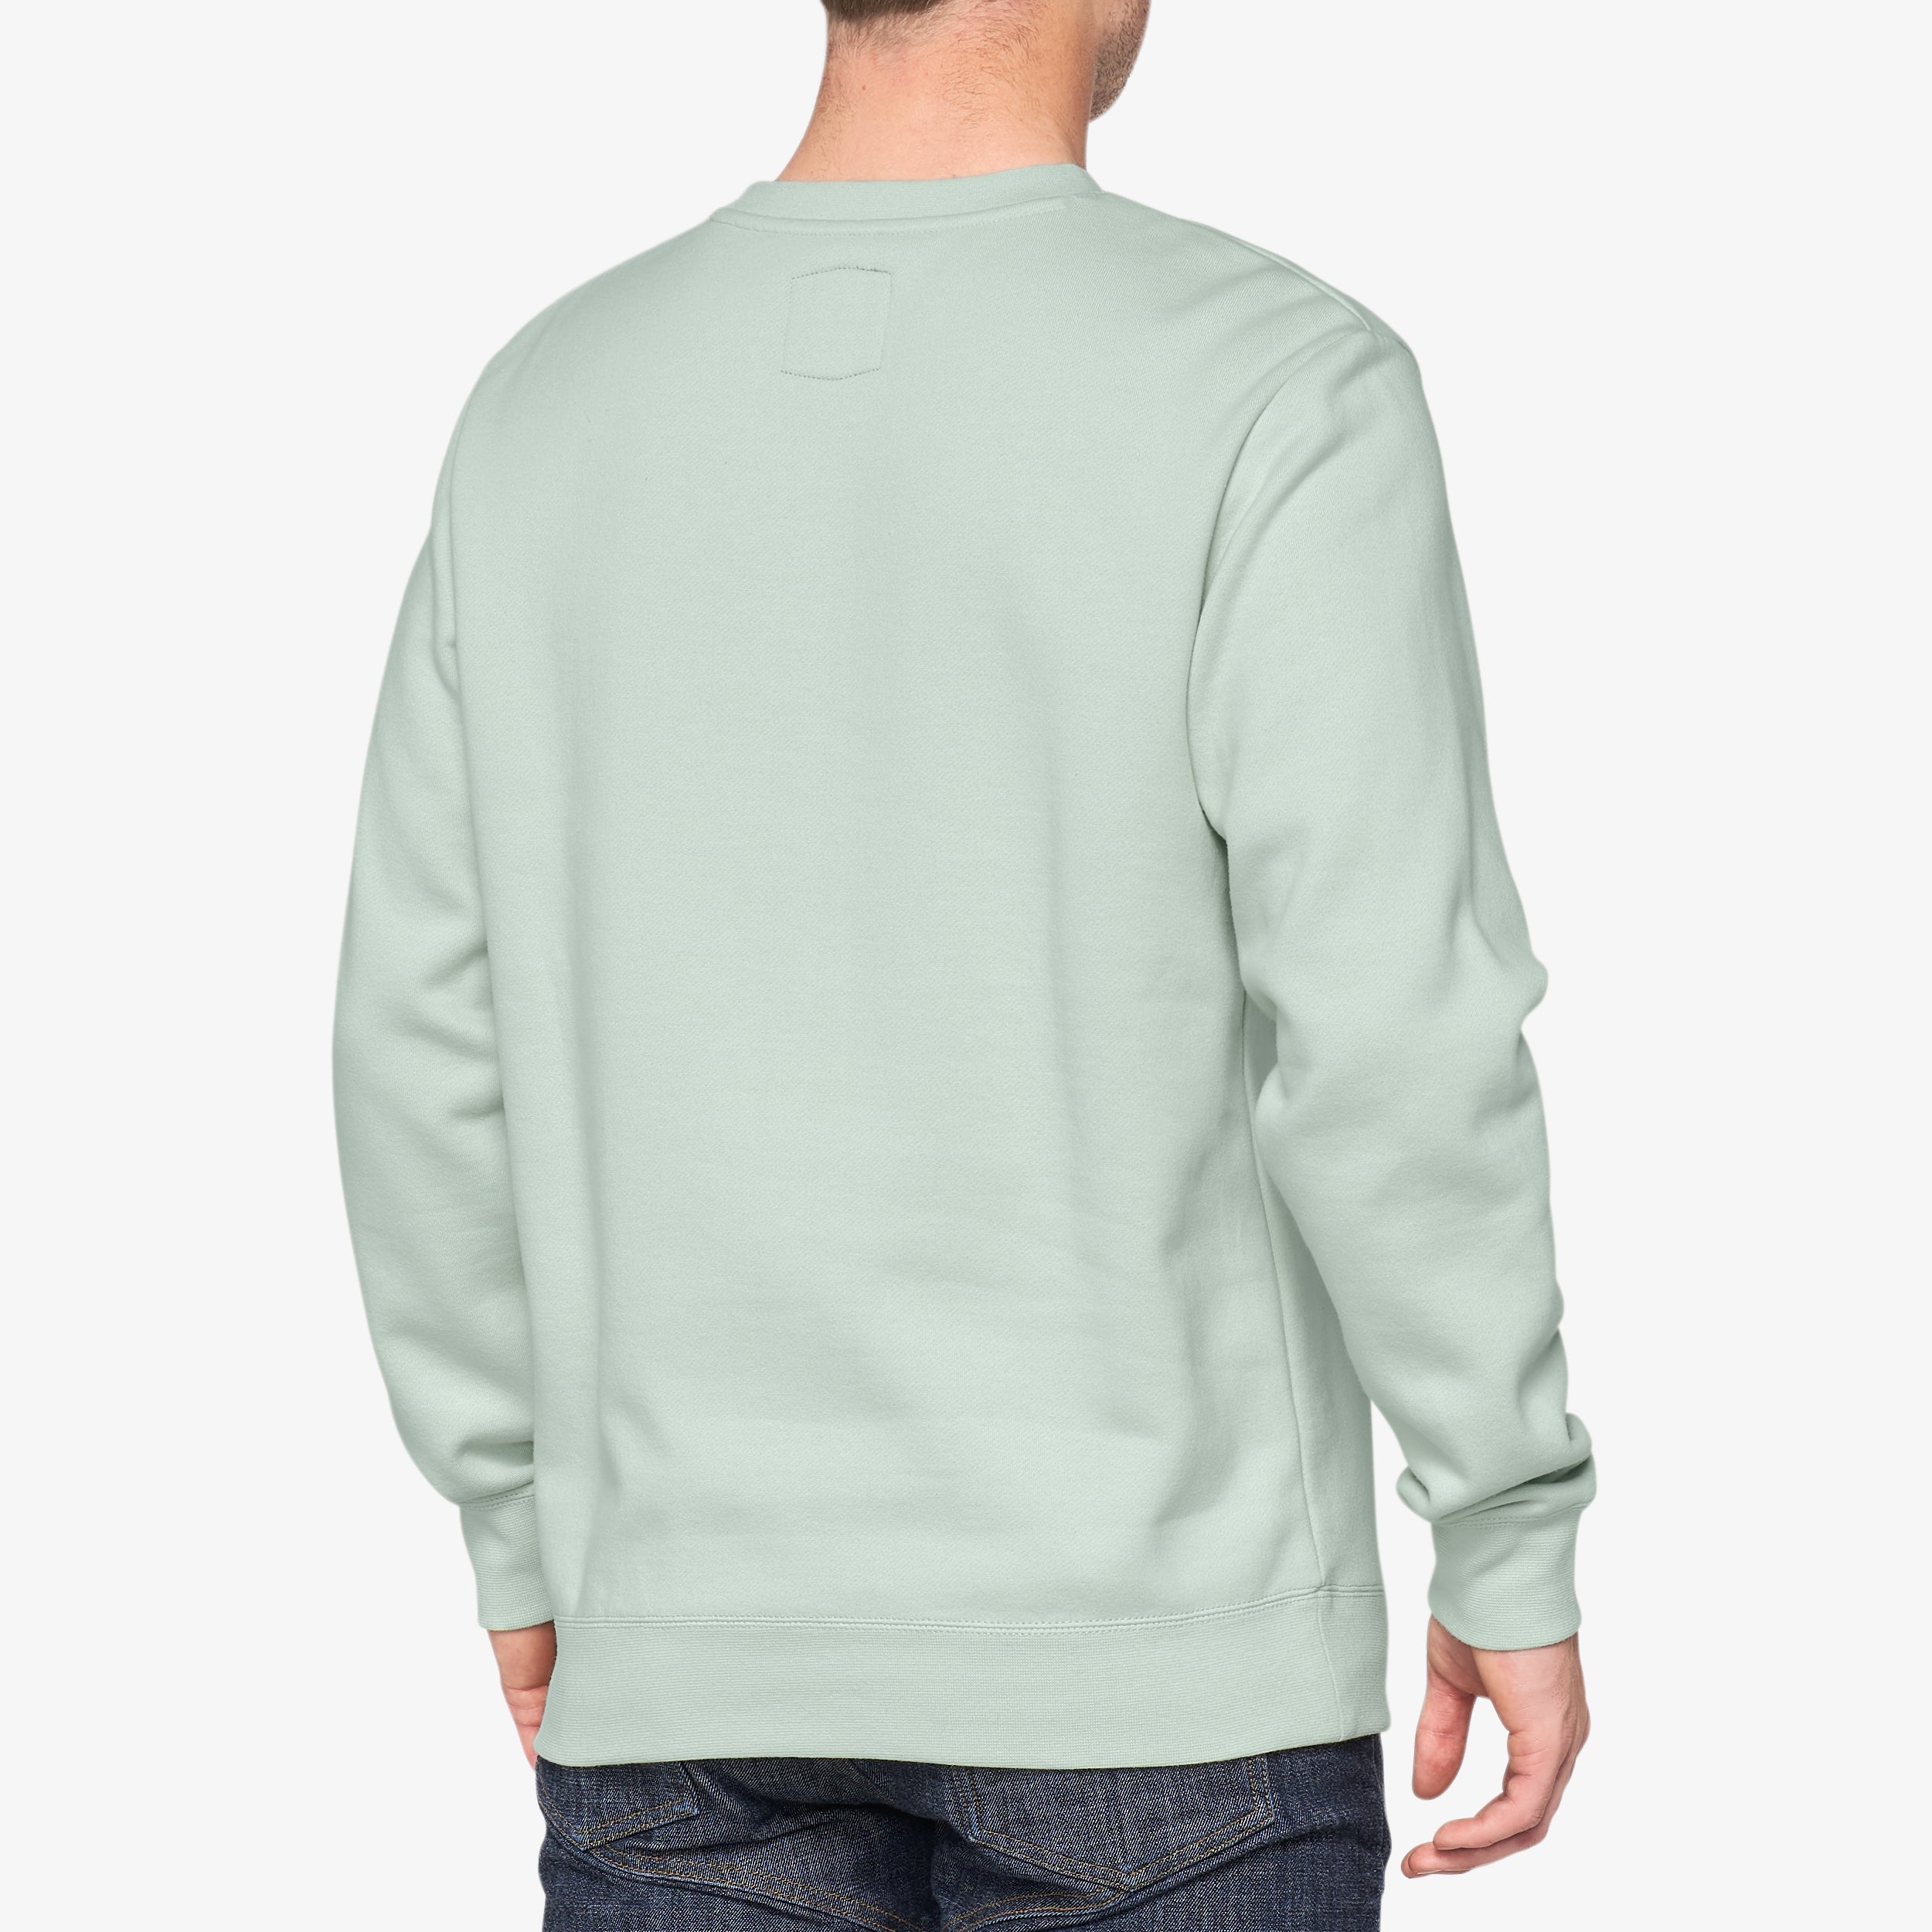 MANIFESTO Crewneck Sweatshirt Pale Aqua - Secondary